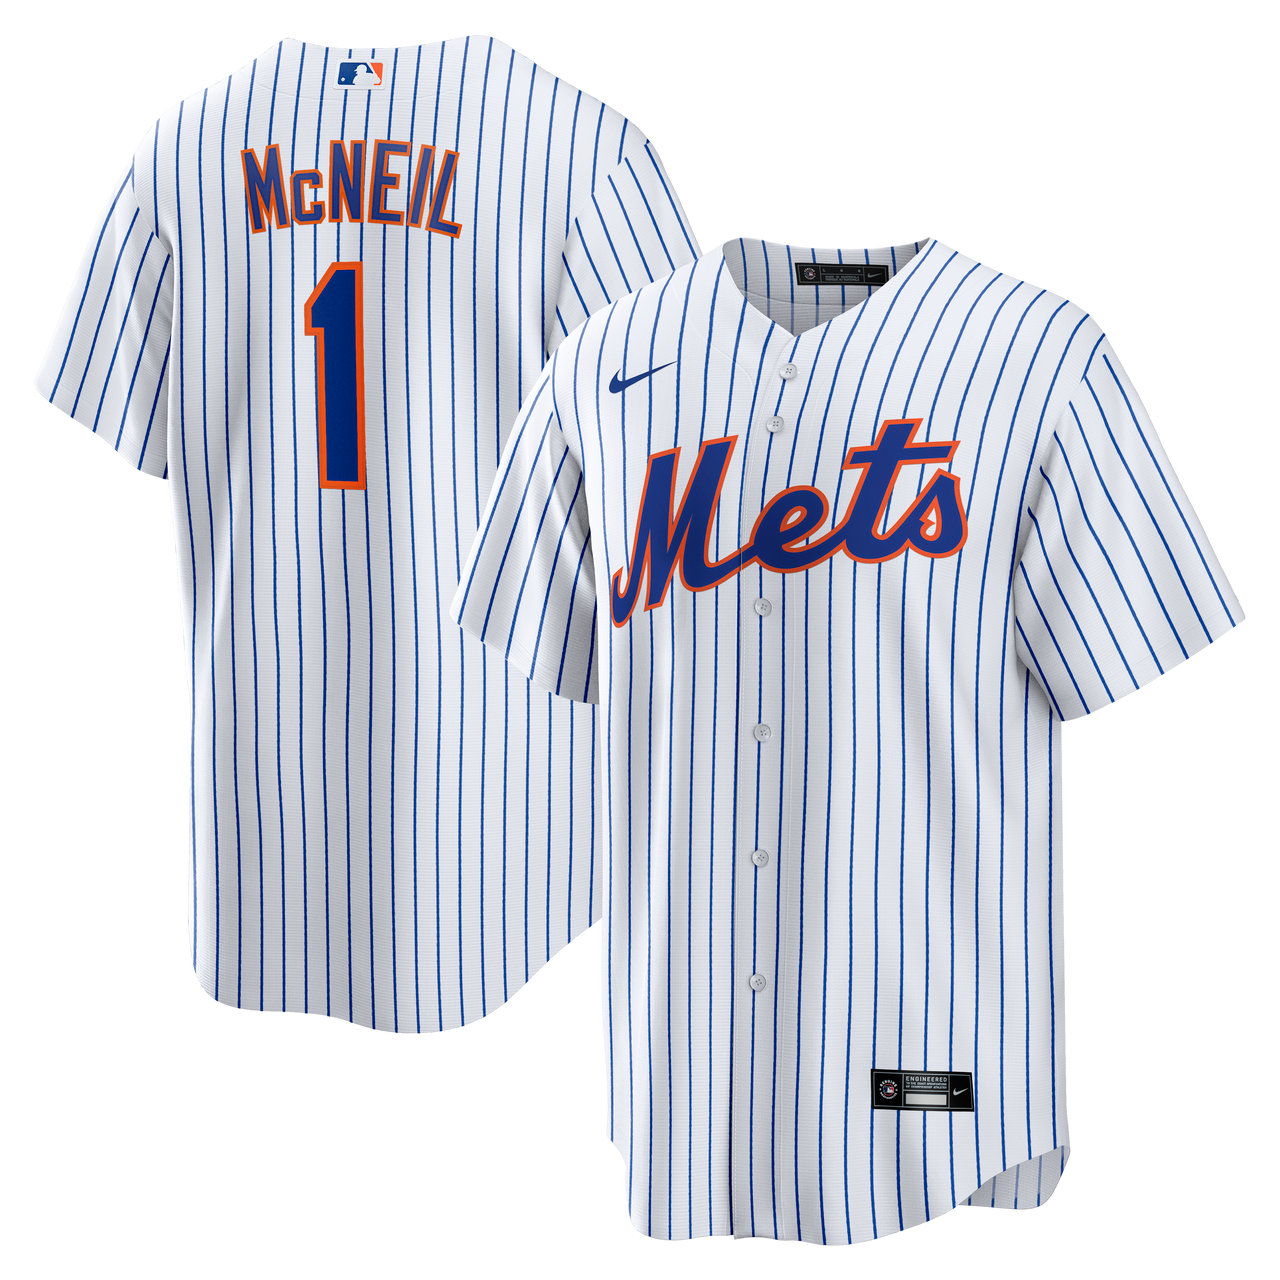 New York Mets Jersey Ornament